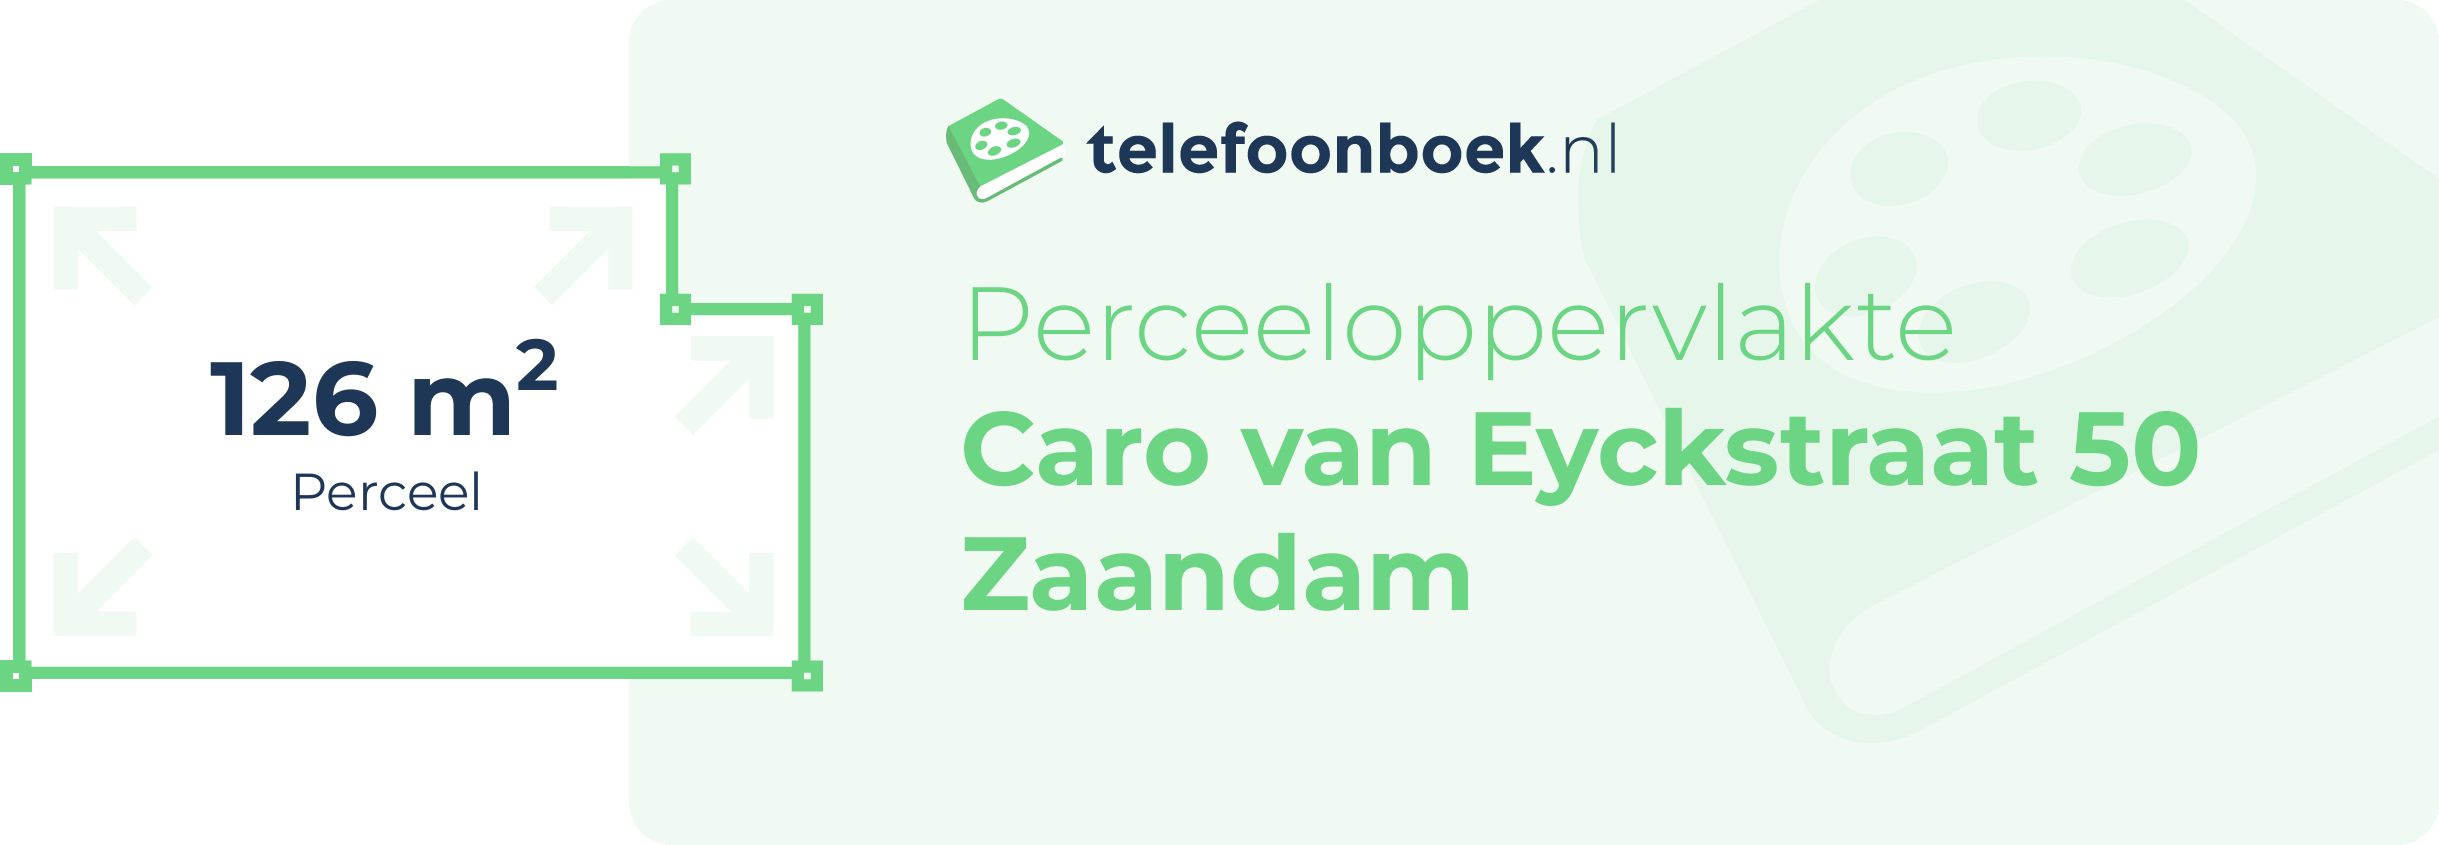 Perceeloppervlakte Caro Van Eyckstraat 50 Zaandam